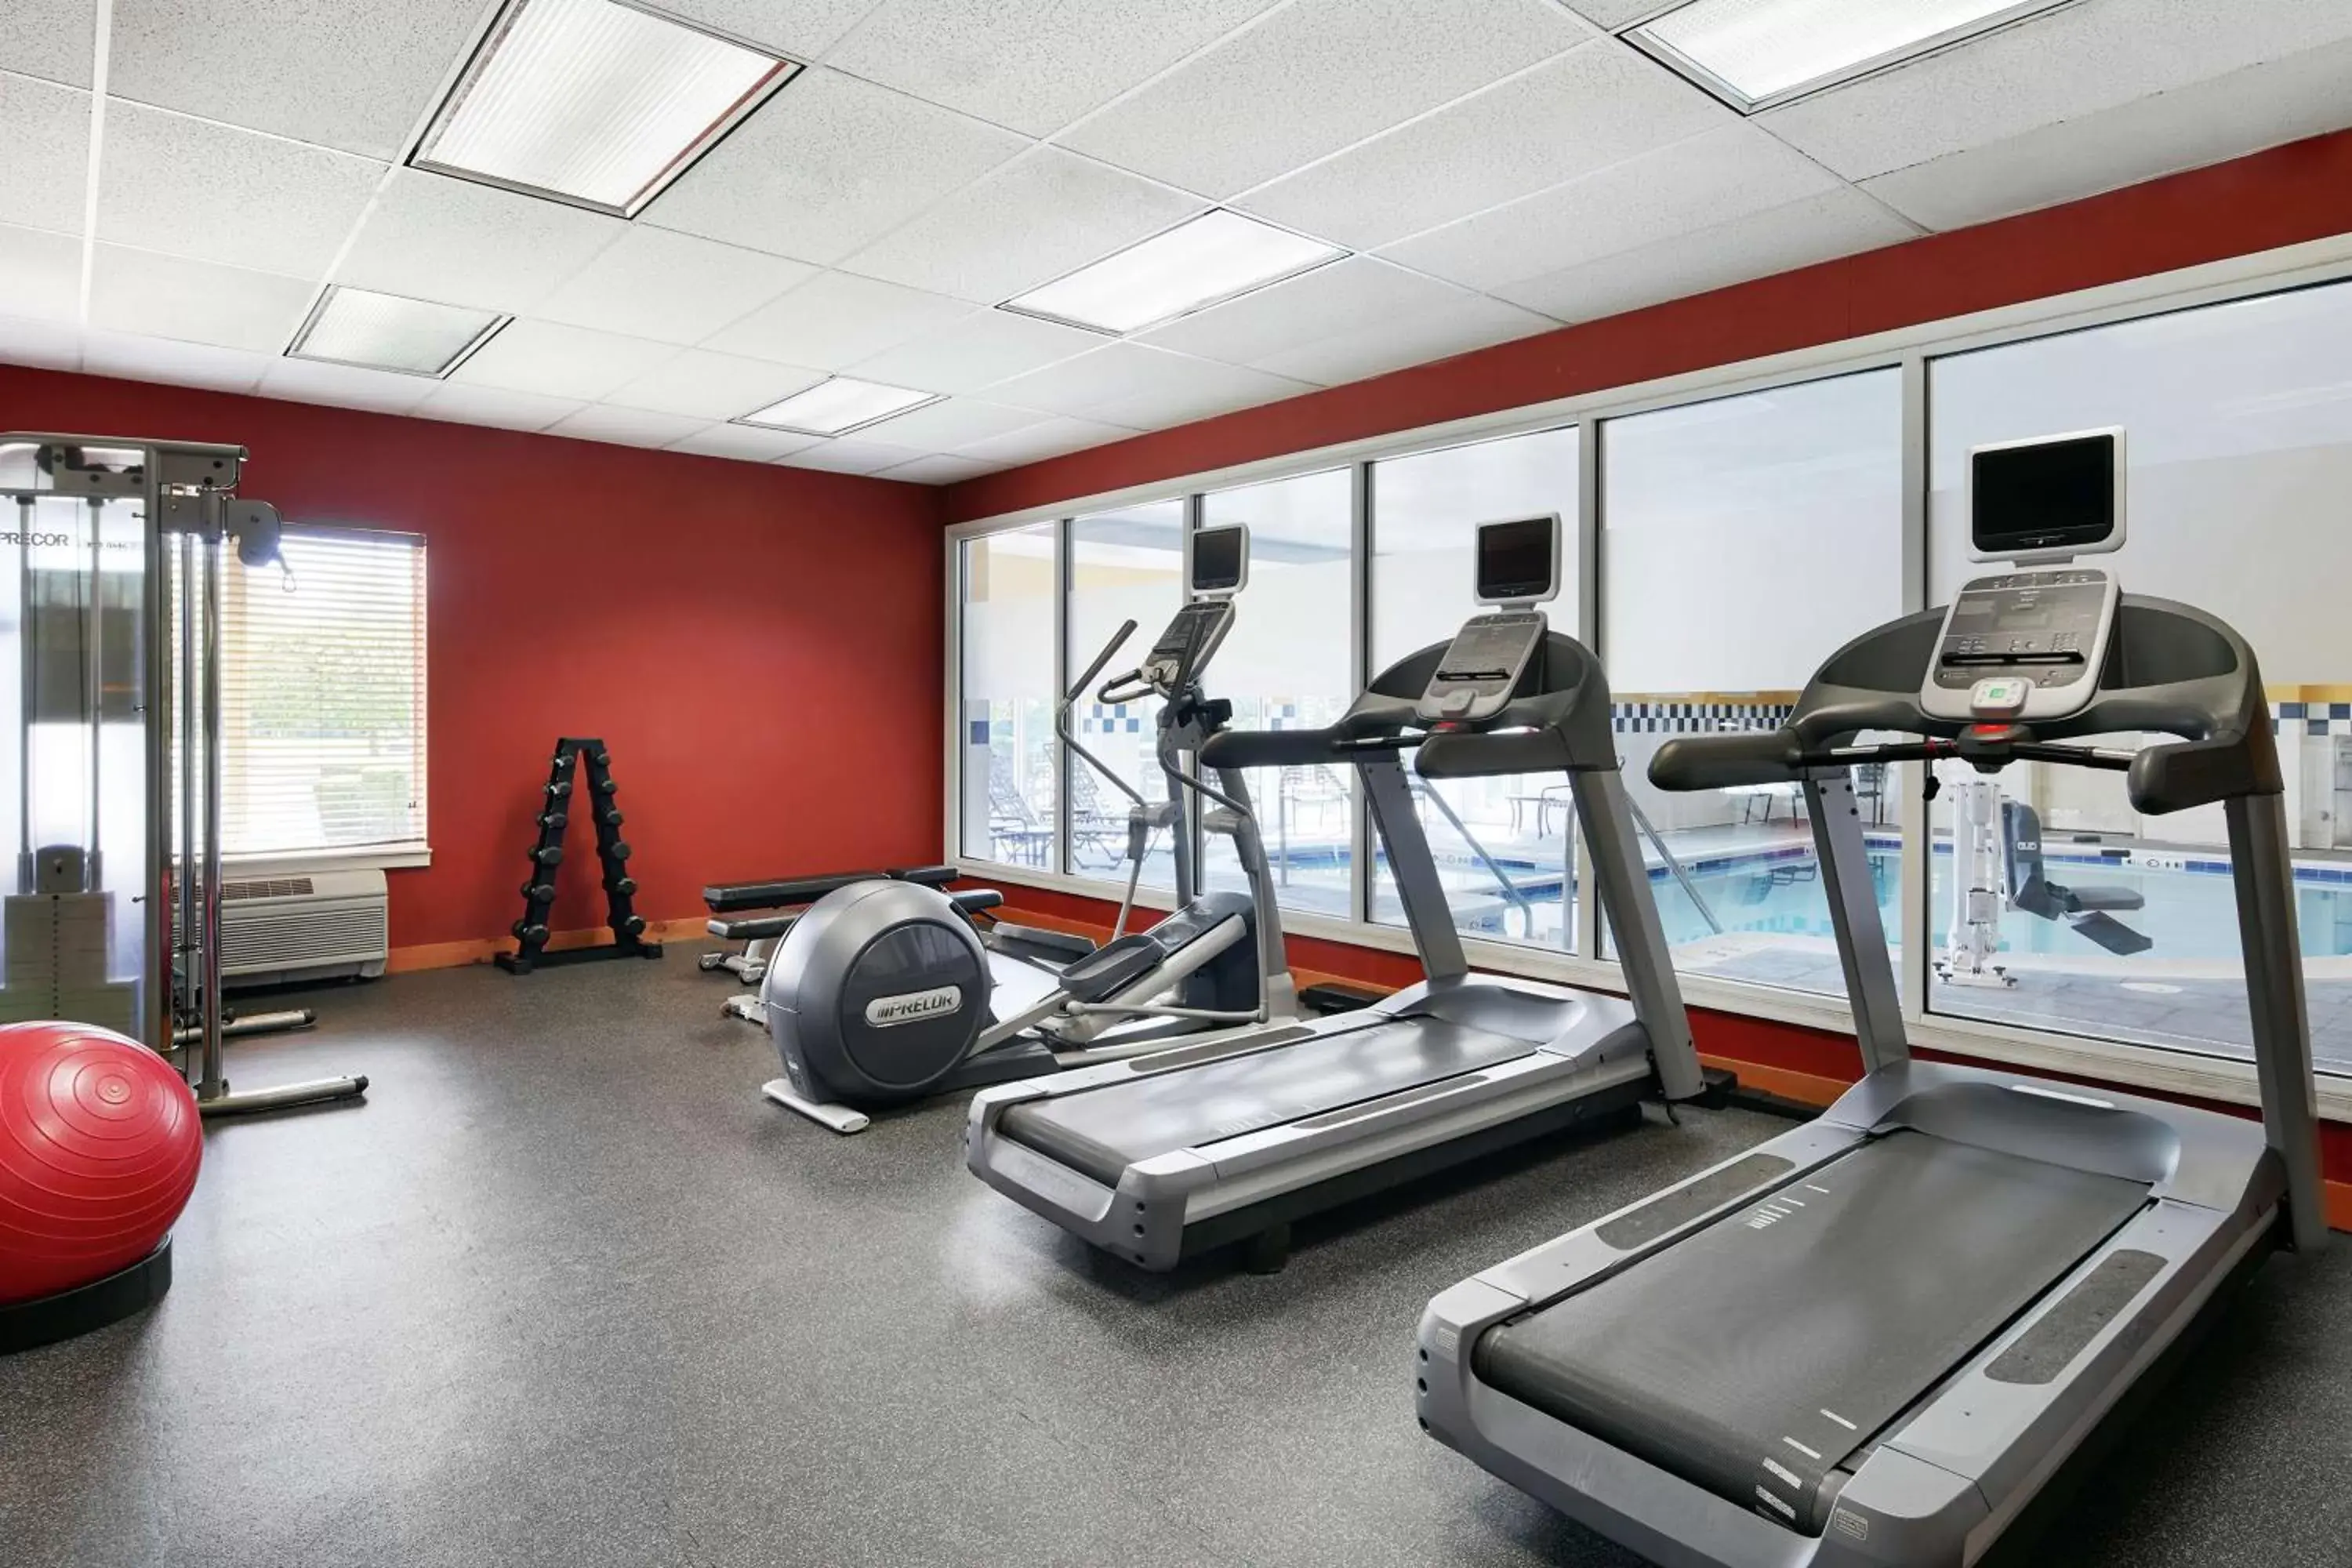 Fitness centre/facilities, Fitness Center/Facilities in Hilton Garden Inn Allentown West